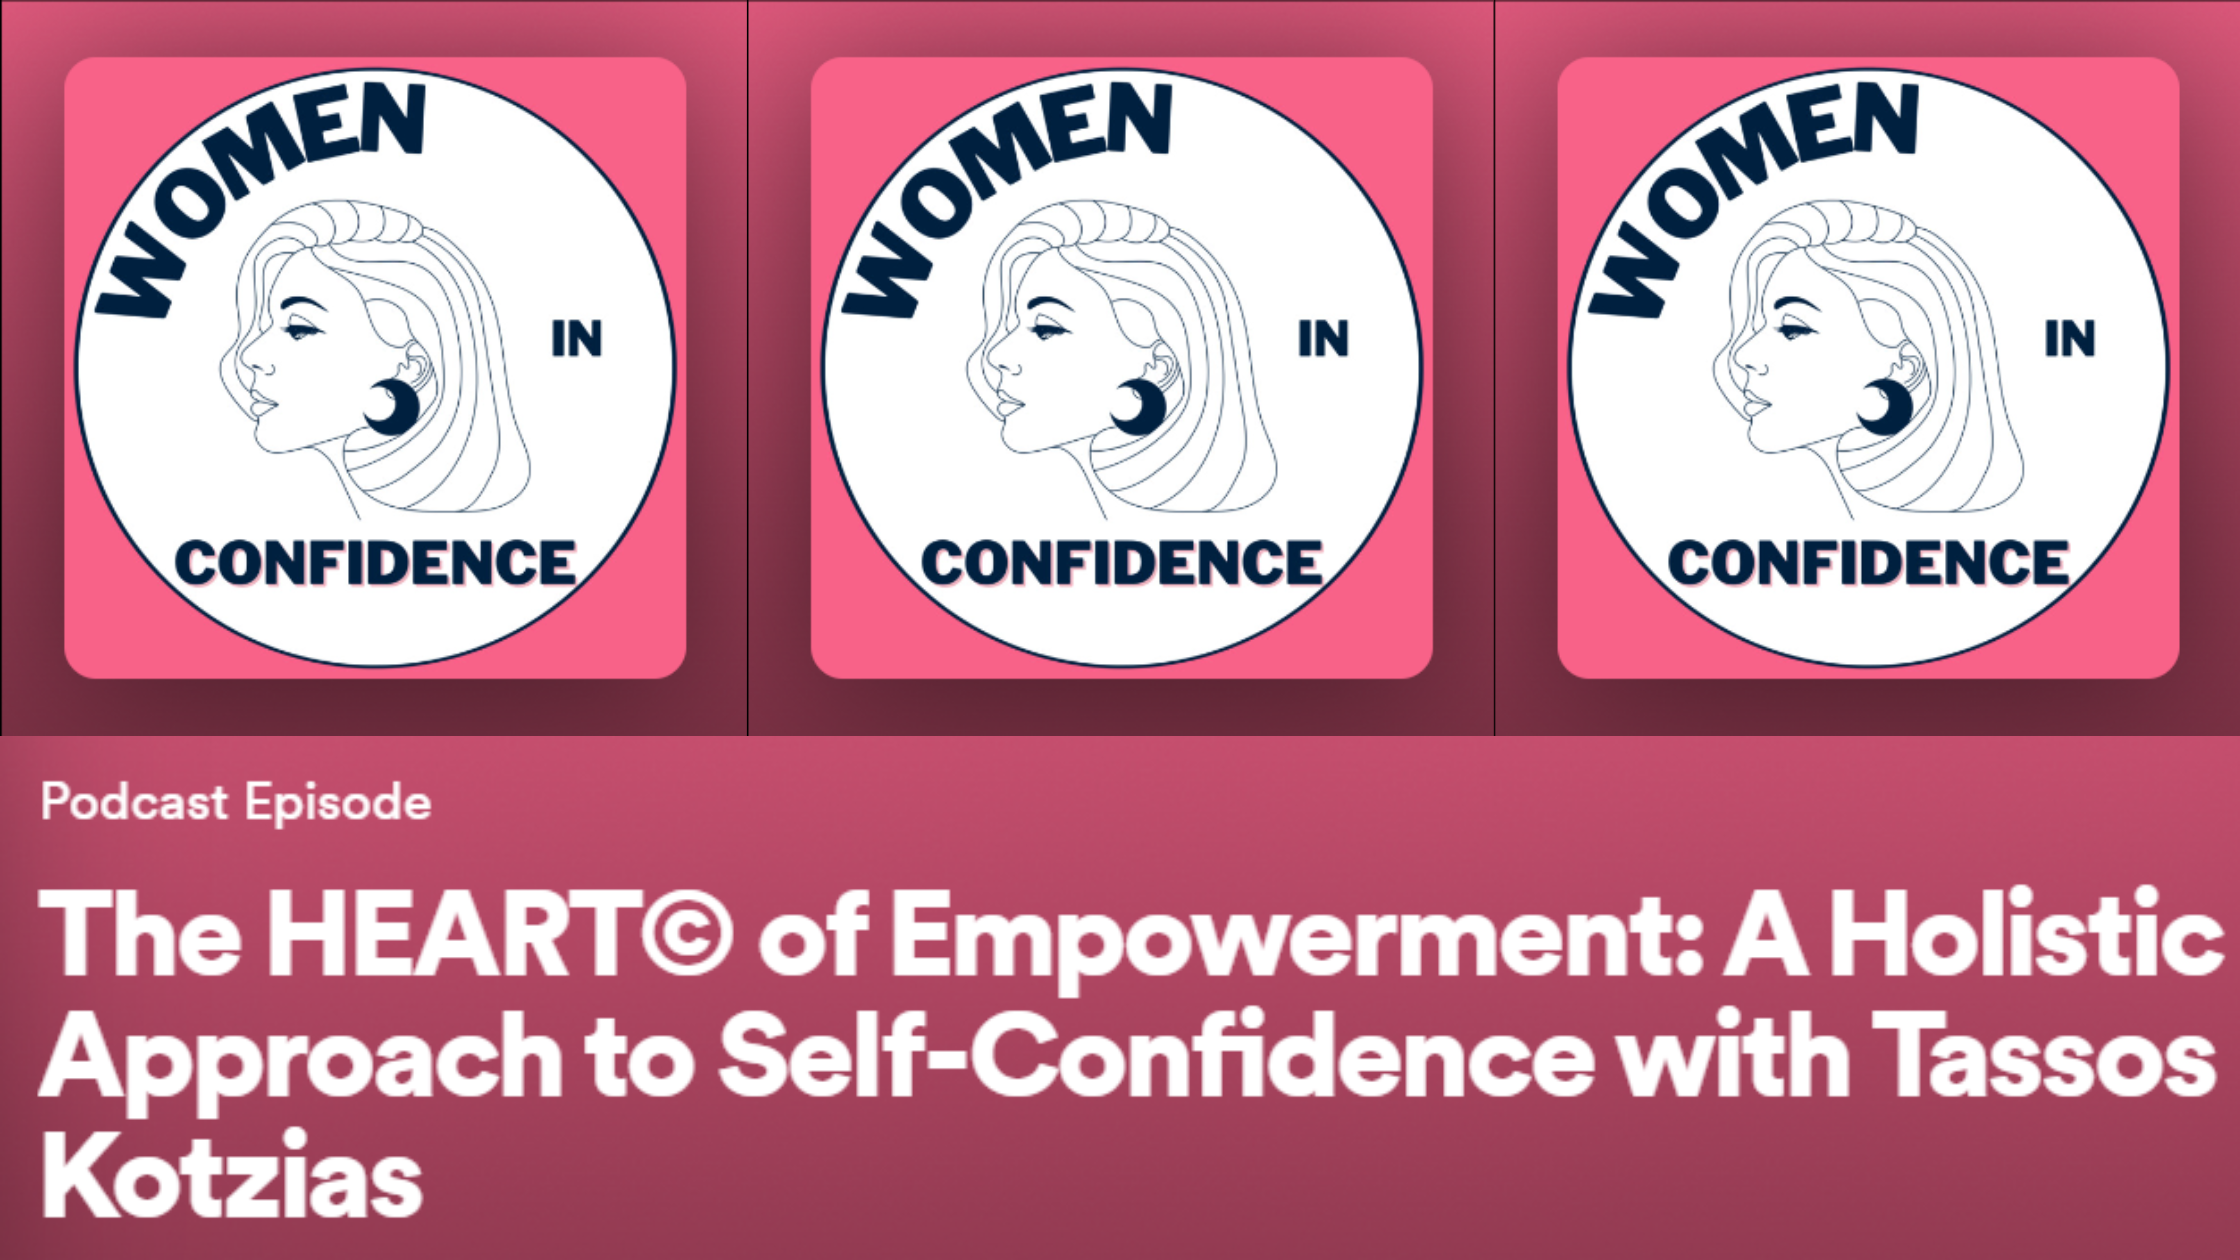 Tassos Kotzias - The Heart of Empowerment - Vanessa Murphy - Women in Confidence Podcast